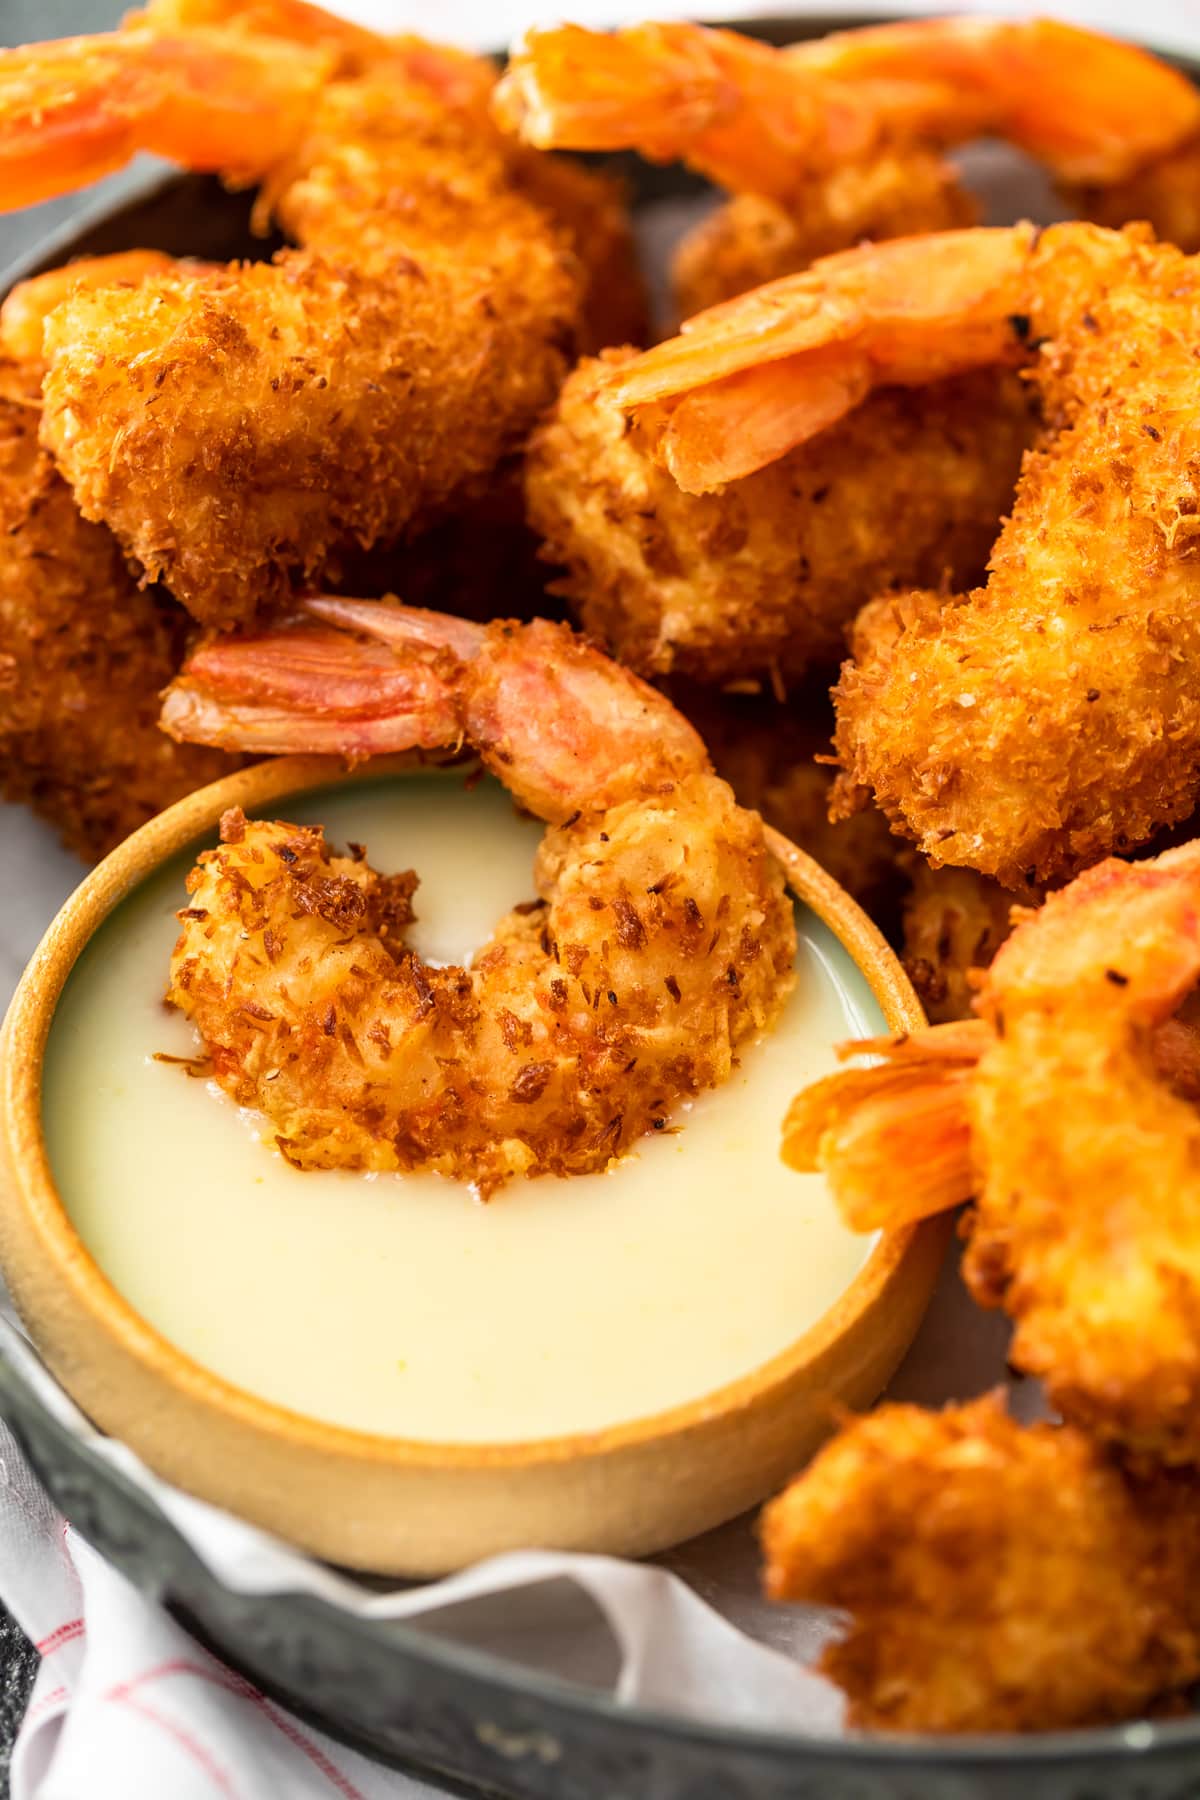 https://www.thecookierookie.com/wp-content/uploads/2019/01/coconut-shrimp-pina-colada-sauce-2-of-7.jpg